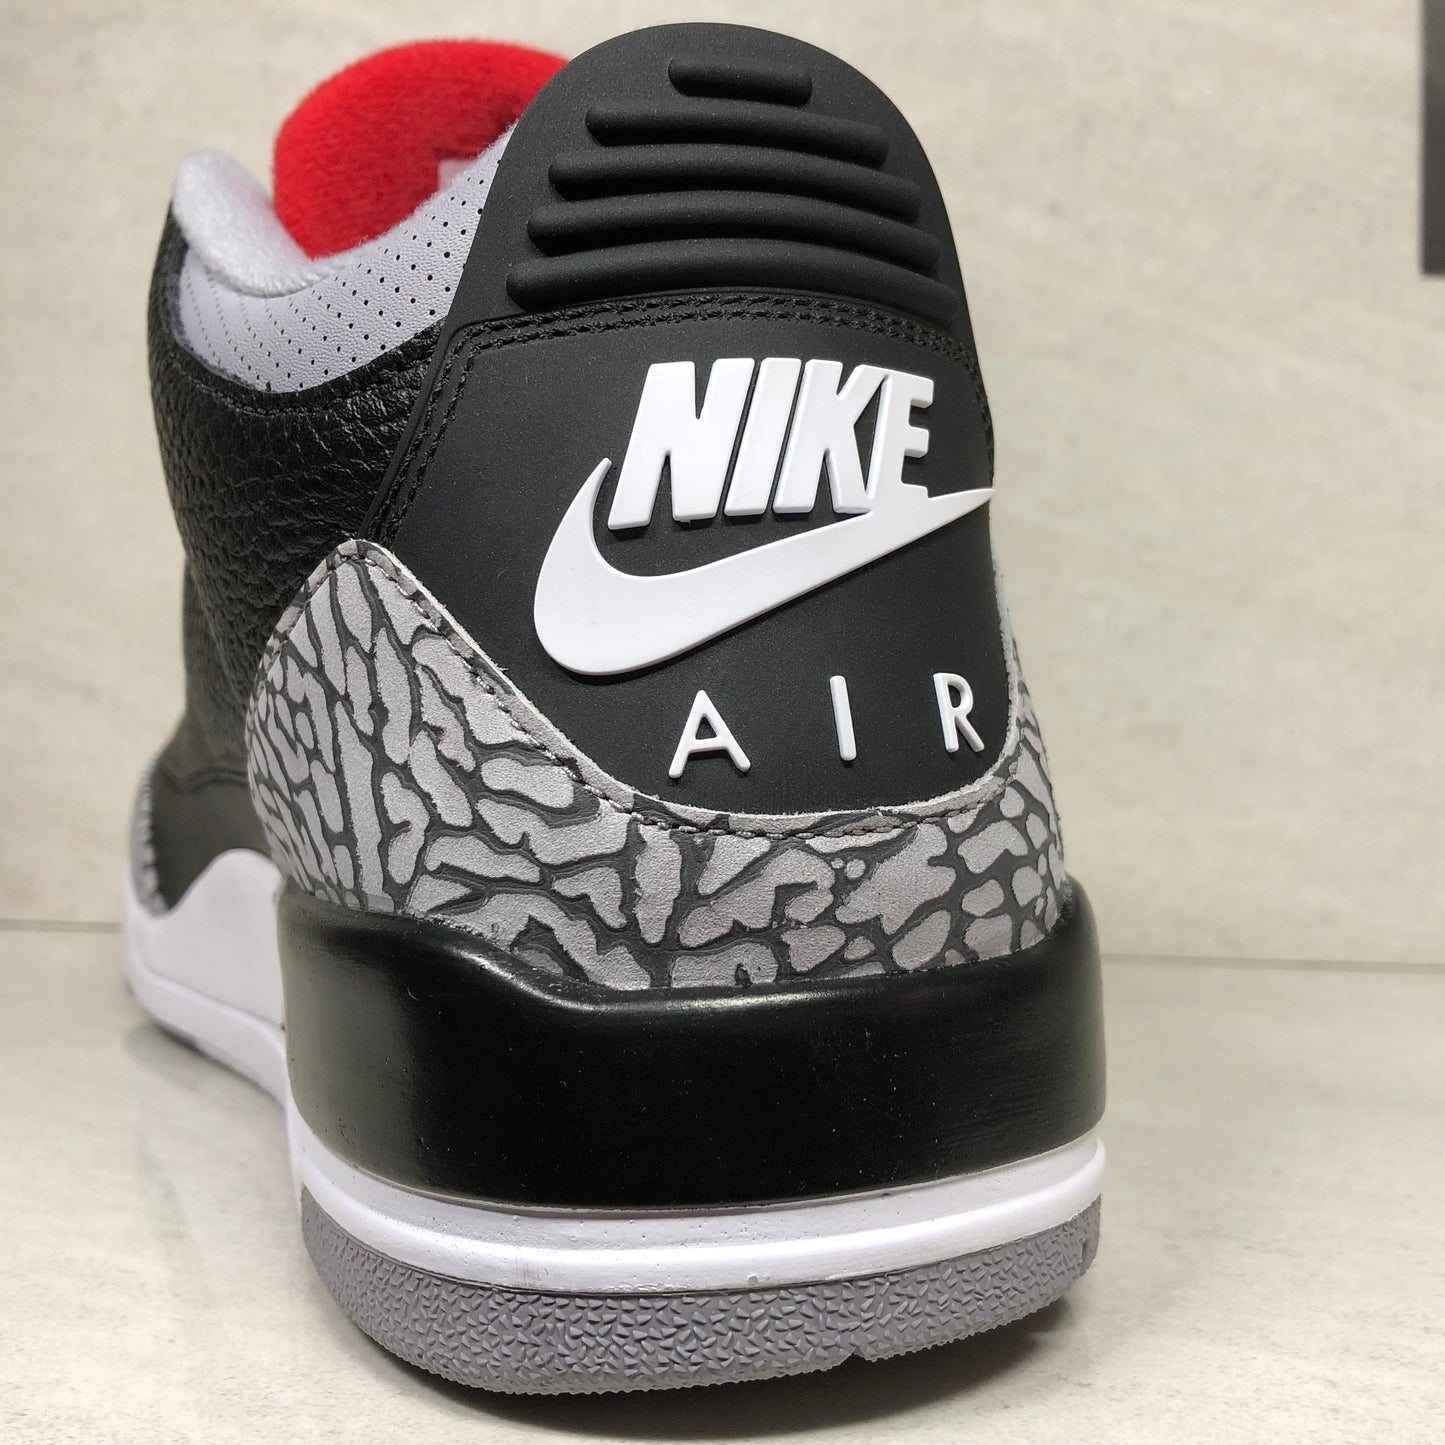 Nike Air Jordan 3 OG Retro Negro Cemento 2018 - 854262 001 - Talla 10/10.5